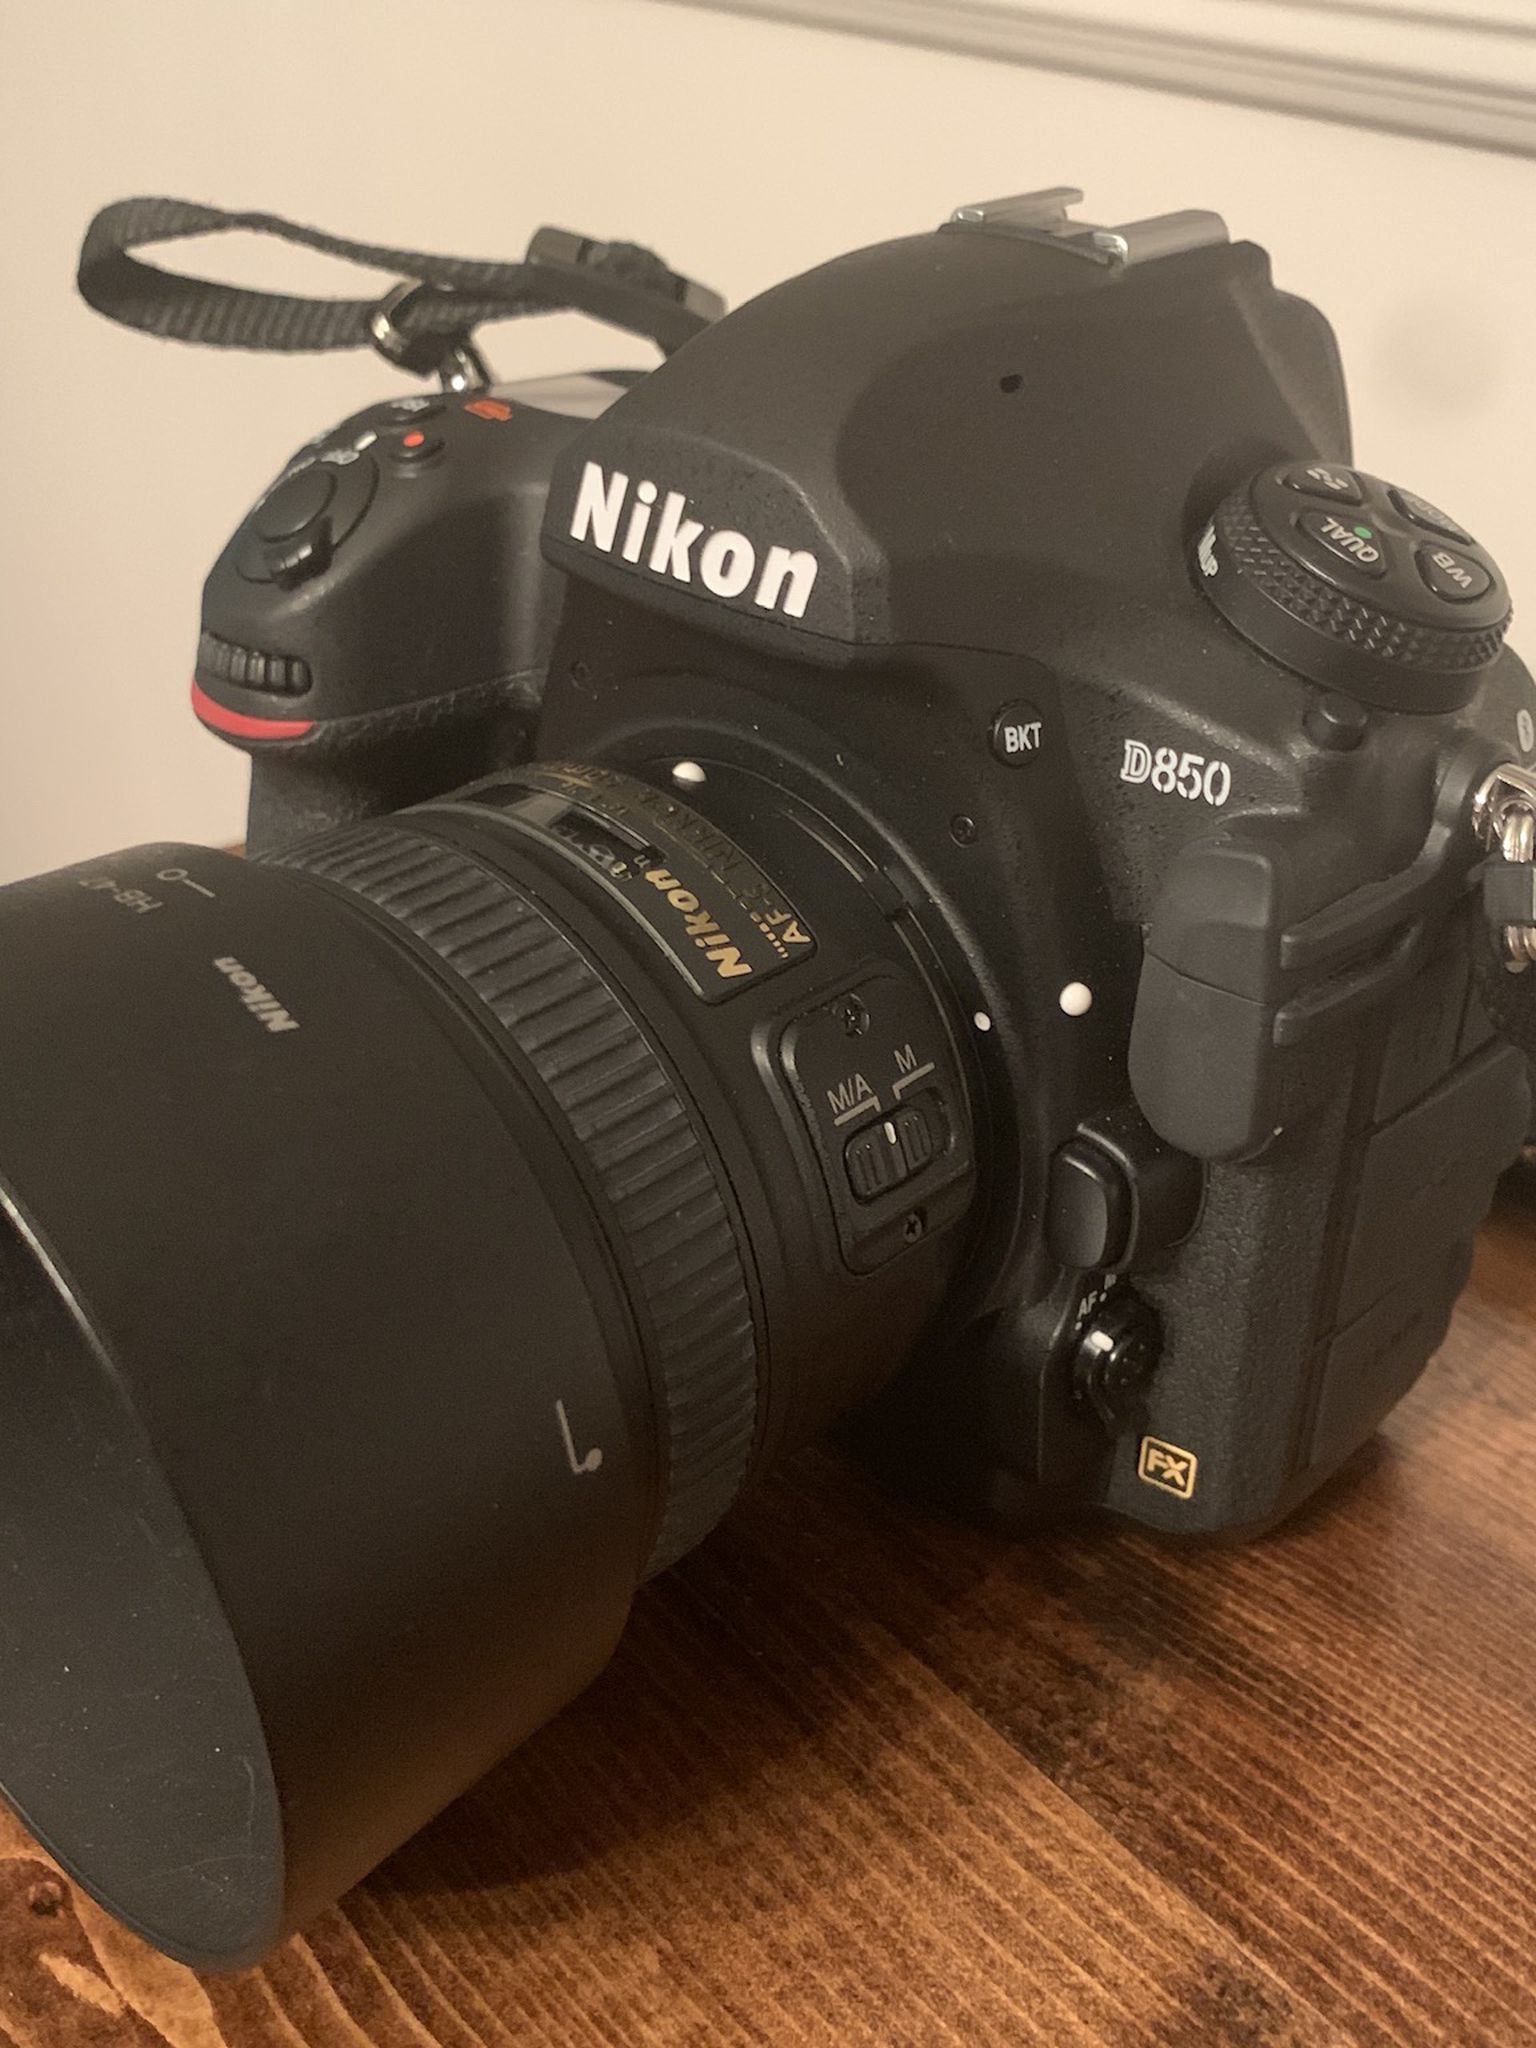 Nikon DSLR Camera And Accessories